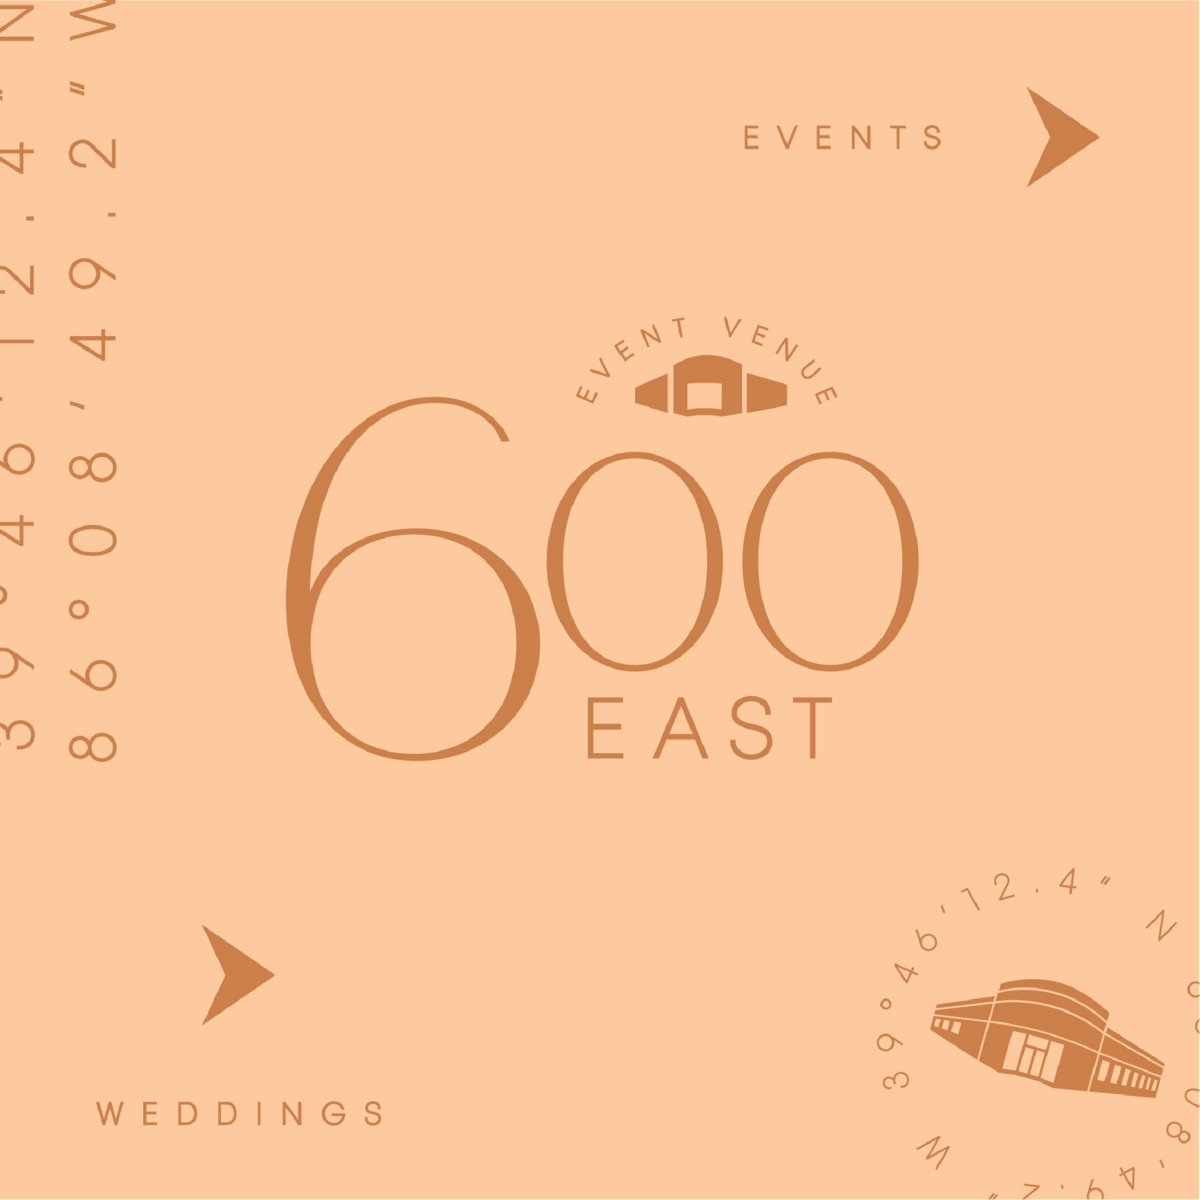 600 East Branding Suite